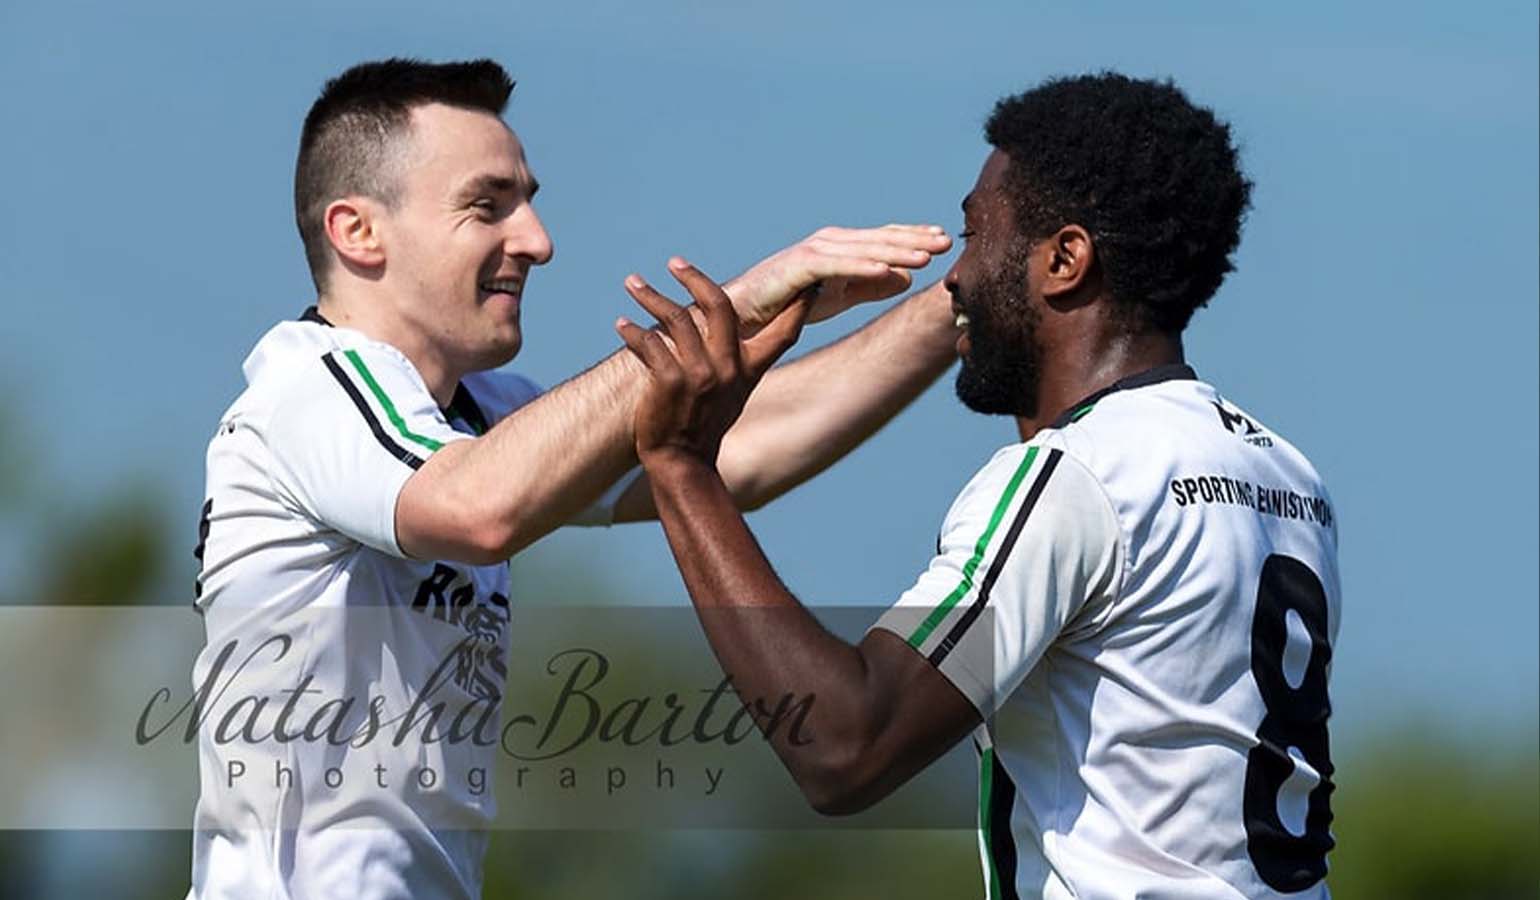 Sporting Ennistymon's Sean McConigley celebrates with a teammate following a goal. Photo credit - Natasha Barton Photography